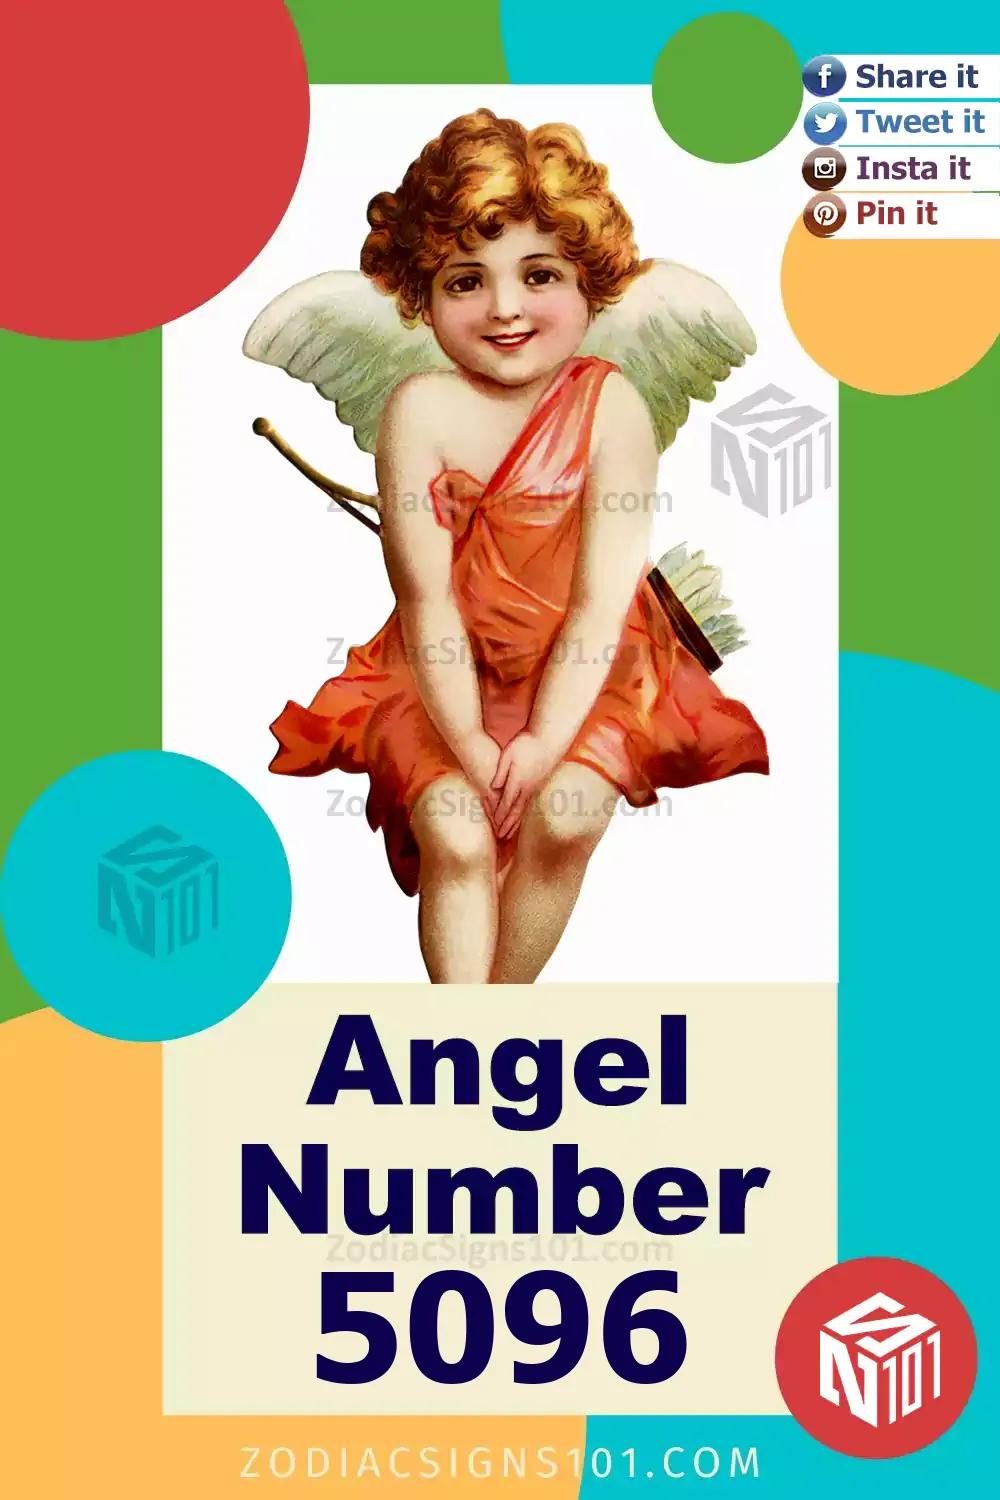 5096-Angel-Number-Meaning.jpg